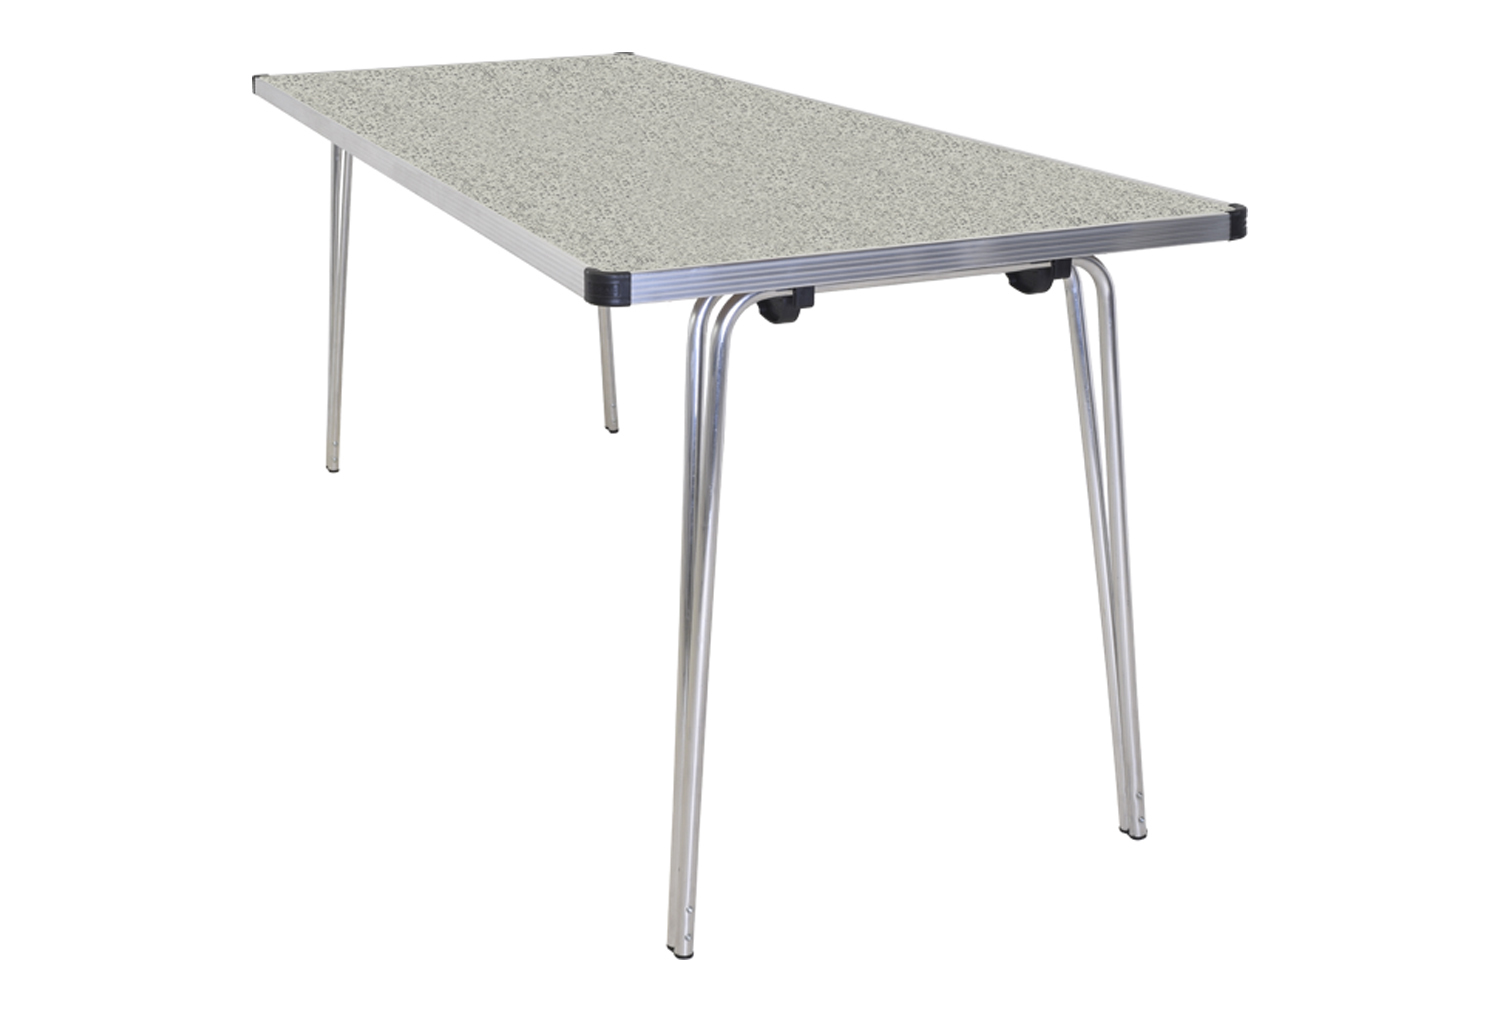 Gopak Contour Folding Table